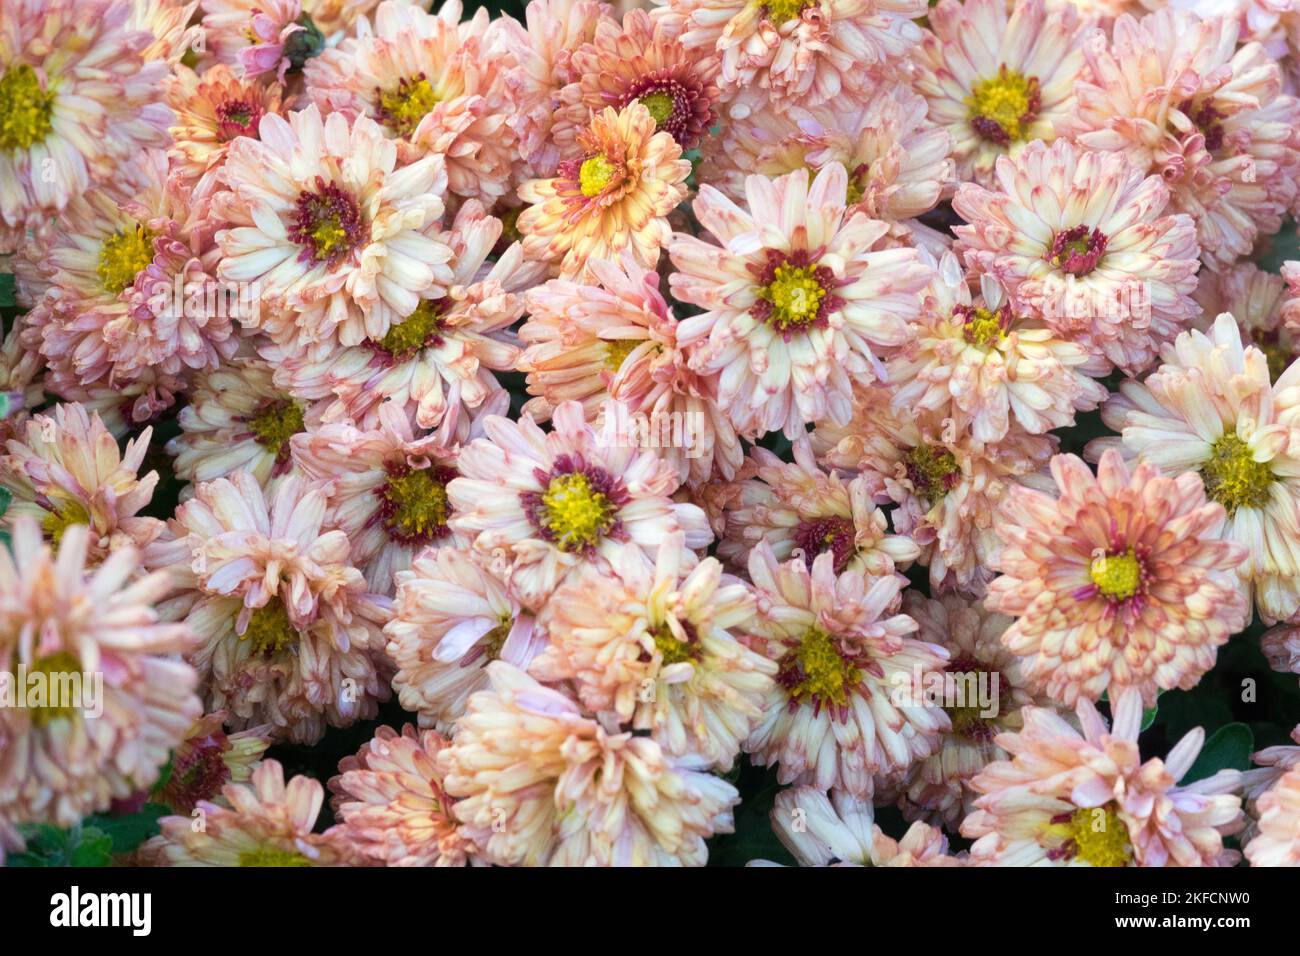 Beige, Mums, Chrysanthemum Herbstbrokat, Dendranthema, Autumn, Blooms, Garden, Mum, Flowers Stock Photo